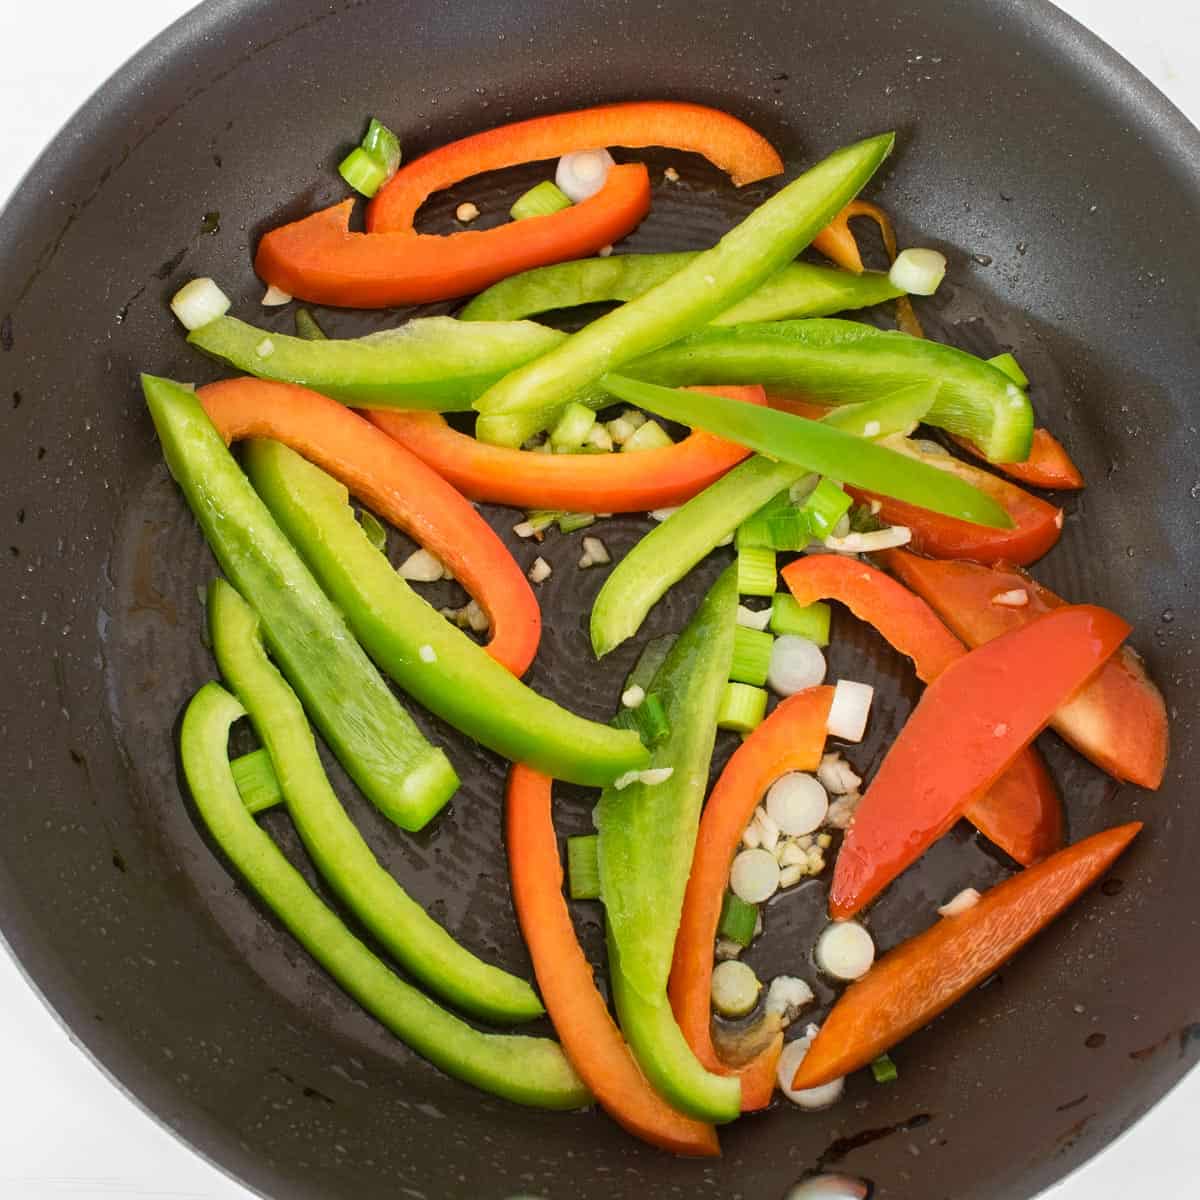 sauteed veggies in the nonstick.